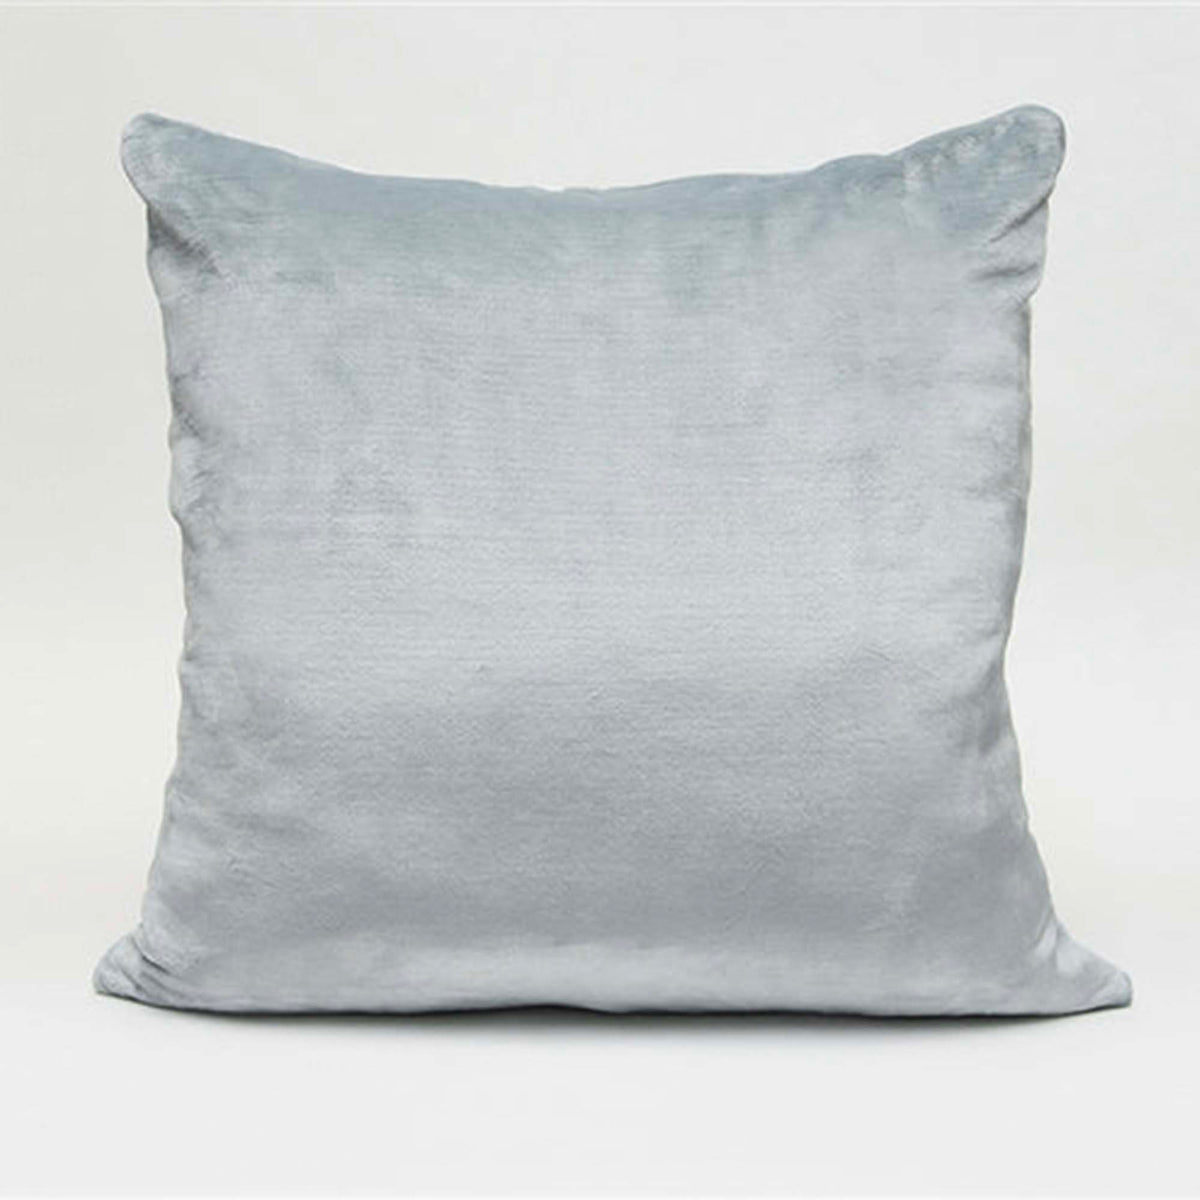 gray luster loft Fleece throw pillow - Luster Loft Fleece Throw Pillows - American blanket company 